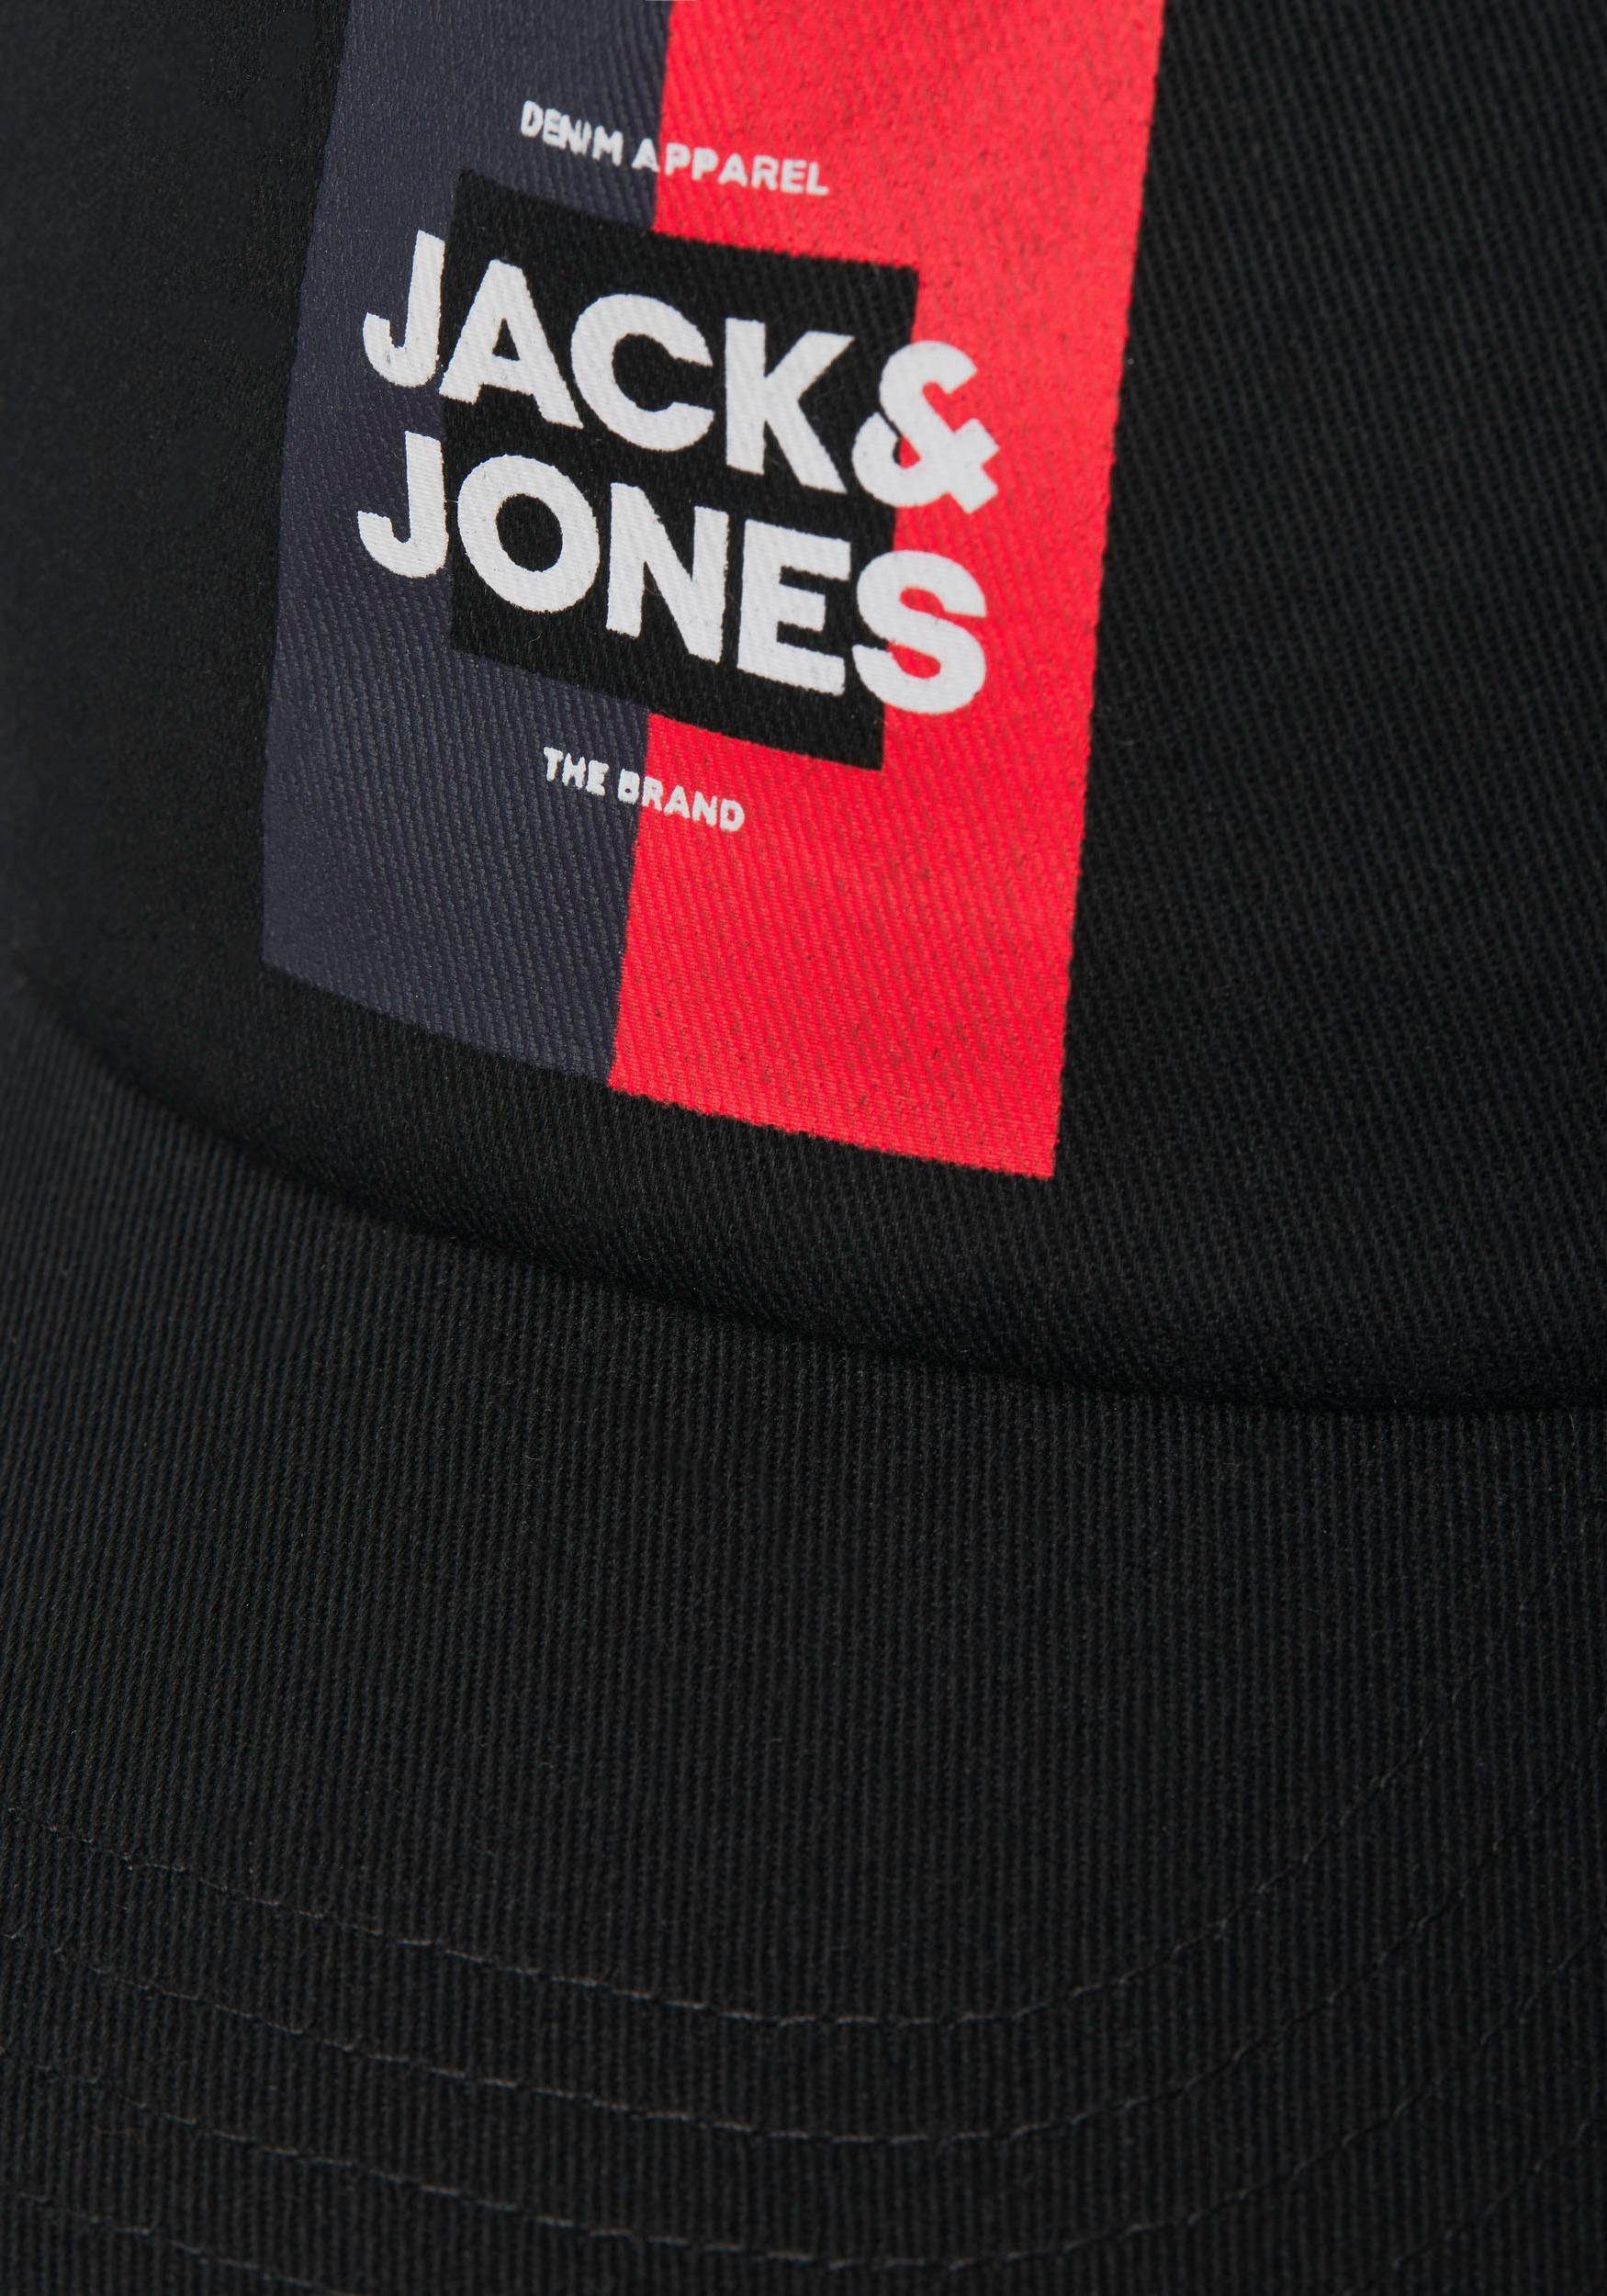 Baseball Jones JACOSCAR CAP & Jack Cap